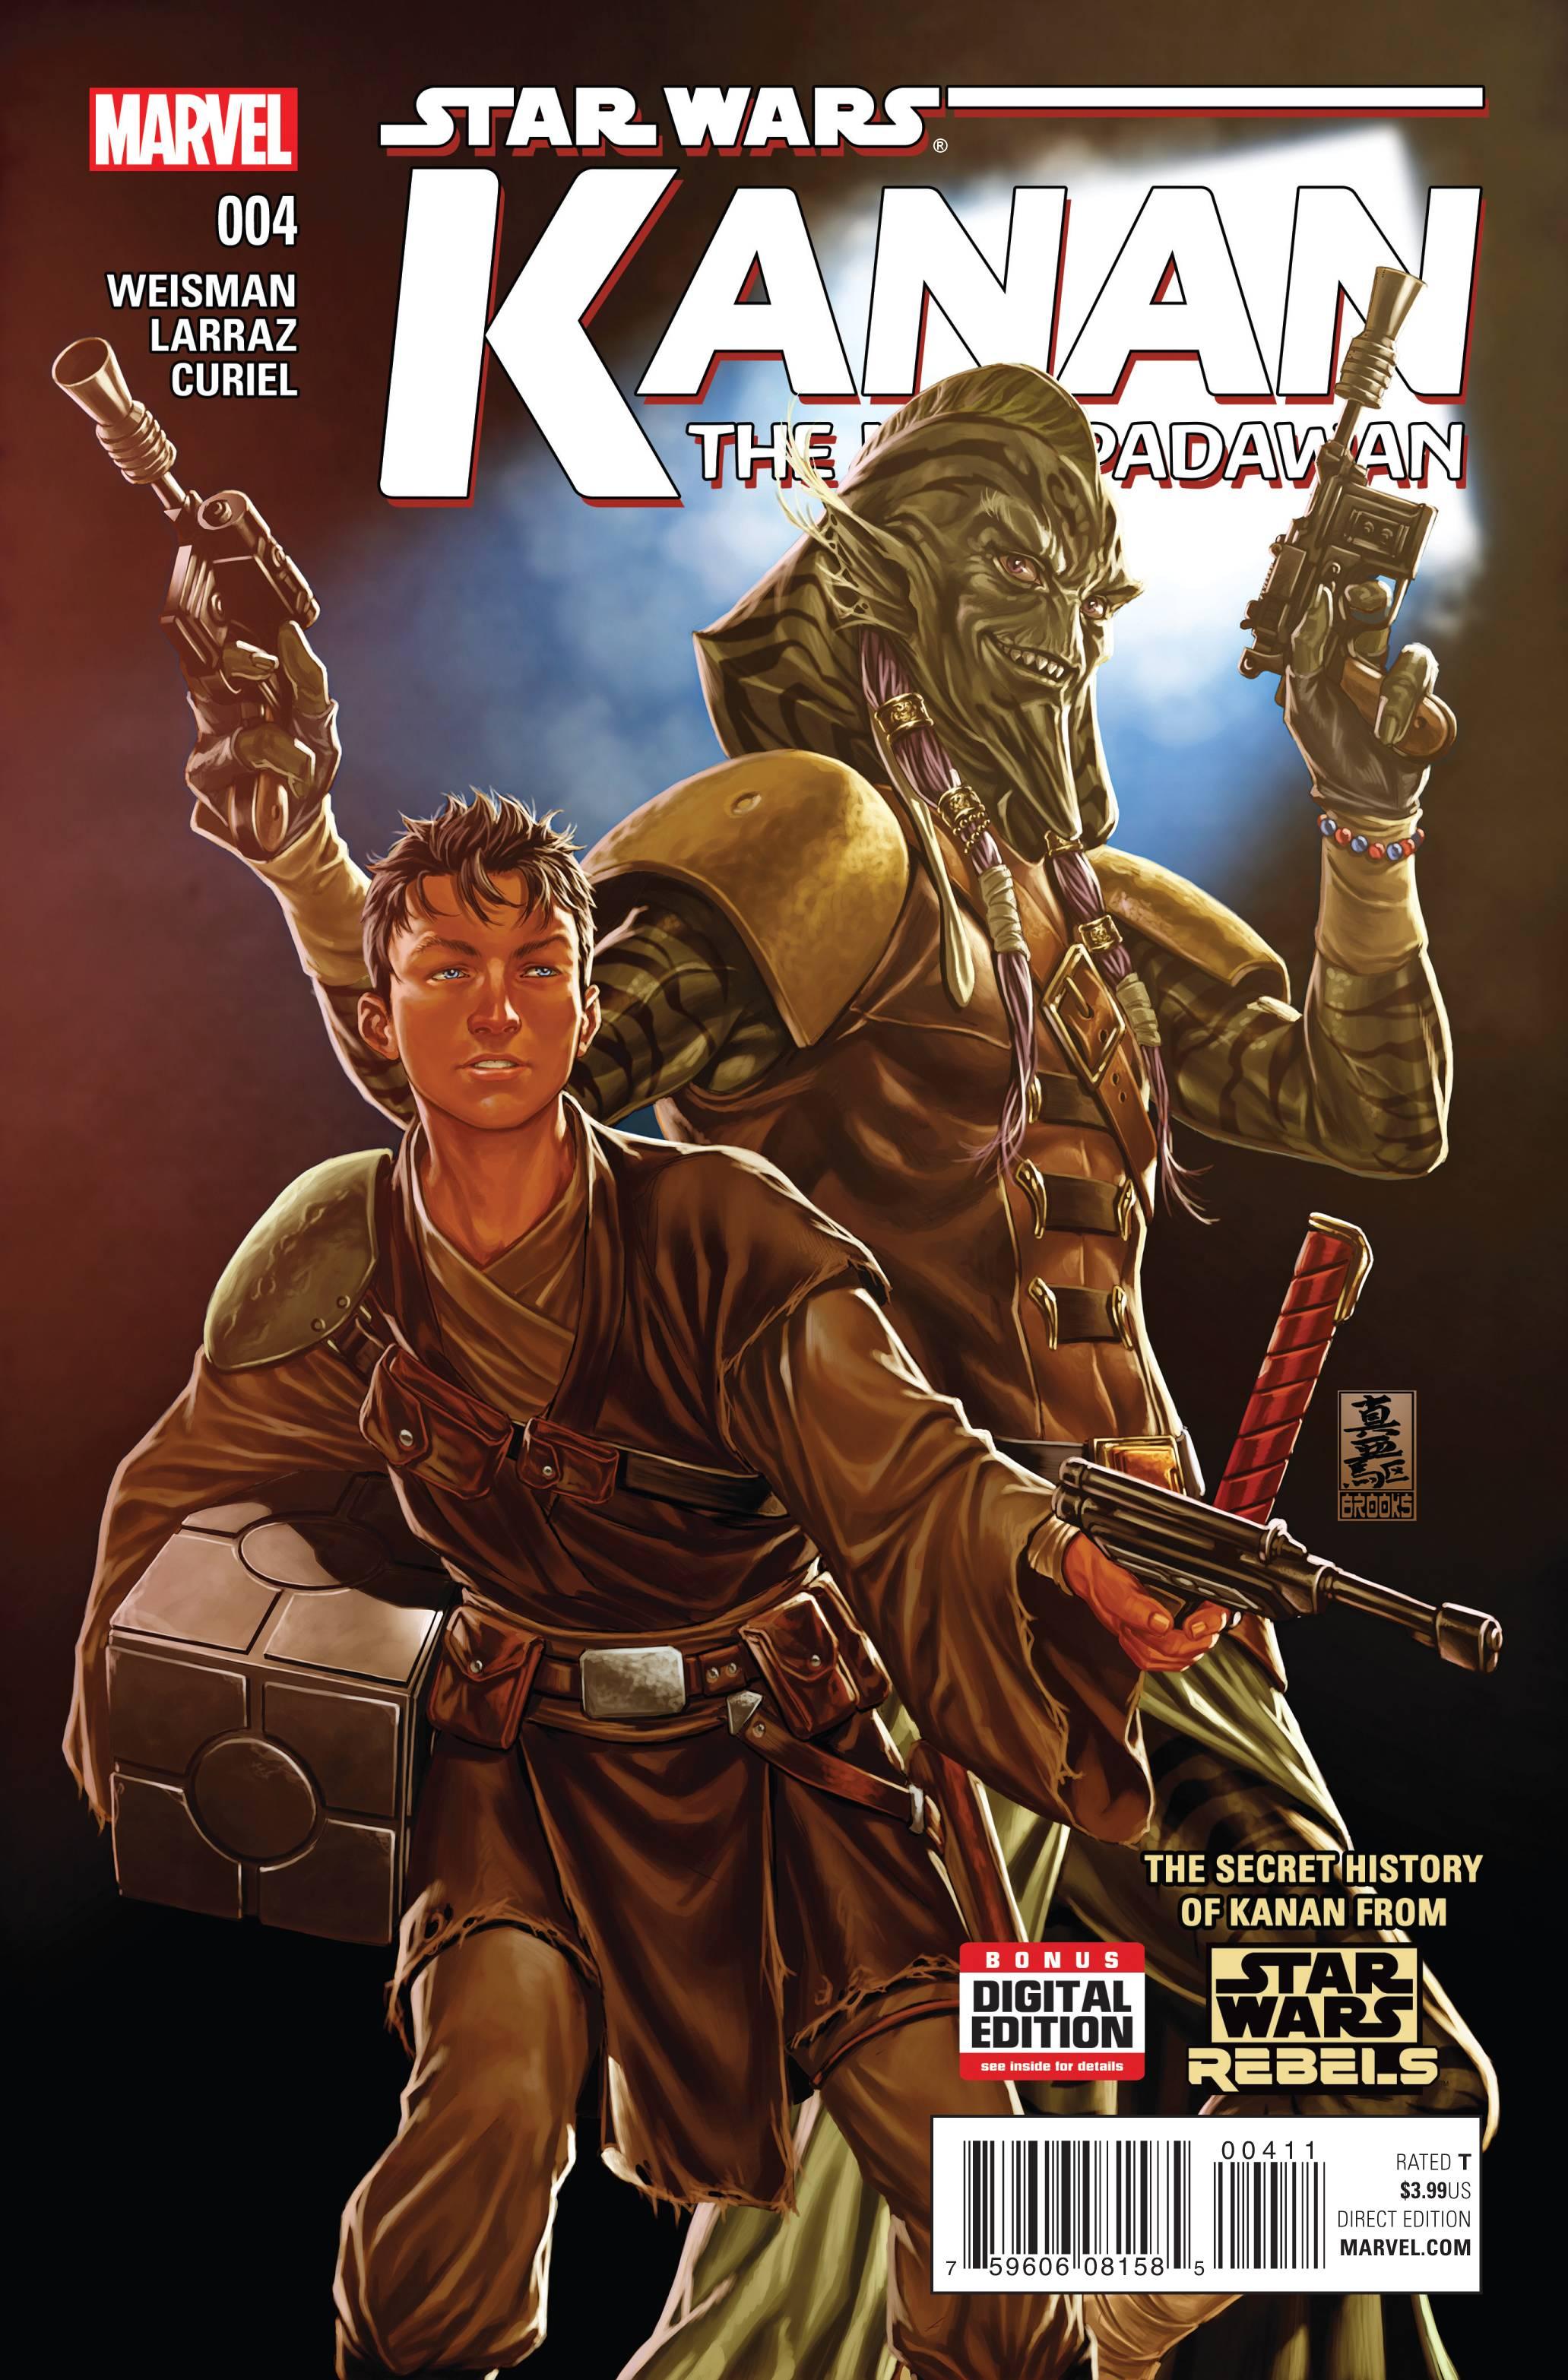 Star Wars: Kanan Vol. 1 #4